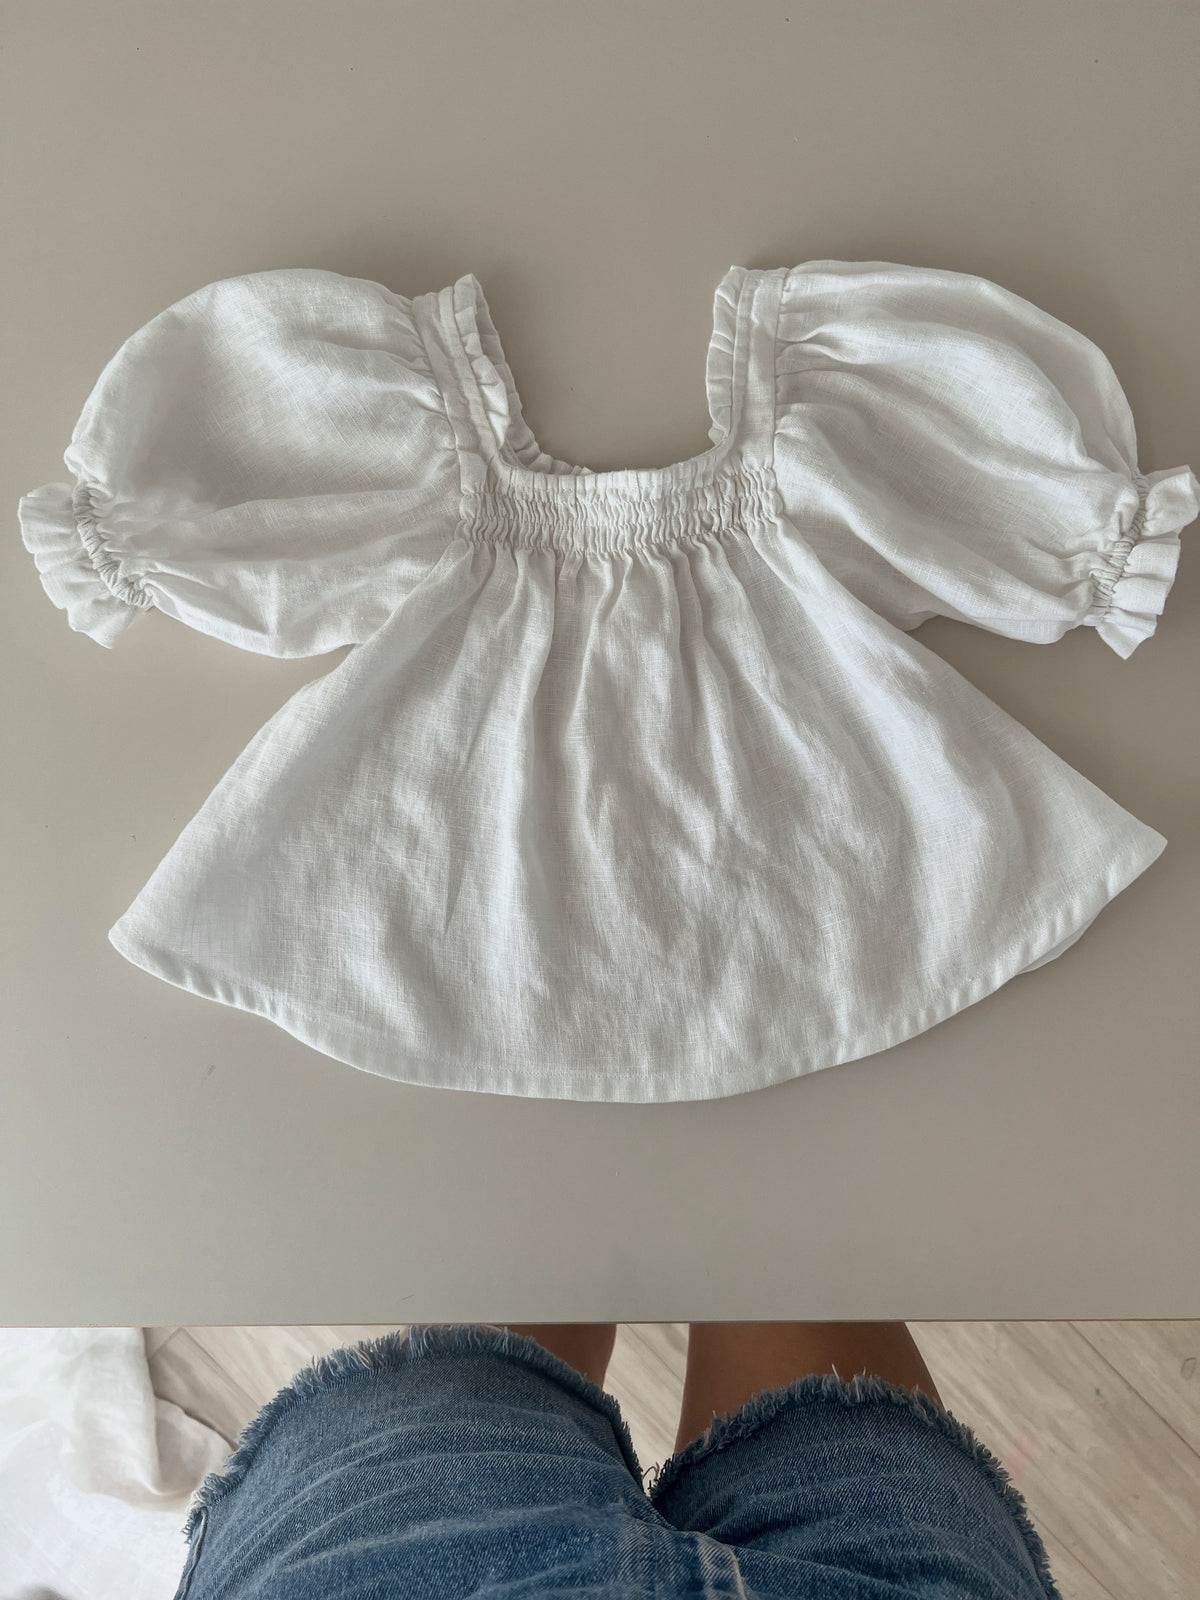 Elisabell blouse size 2 (sample sale)